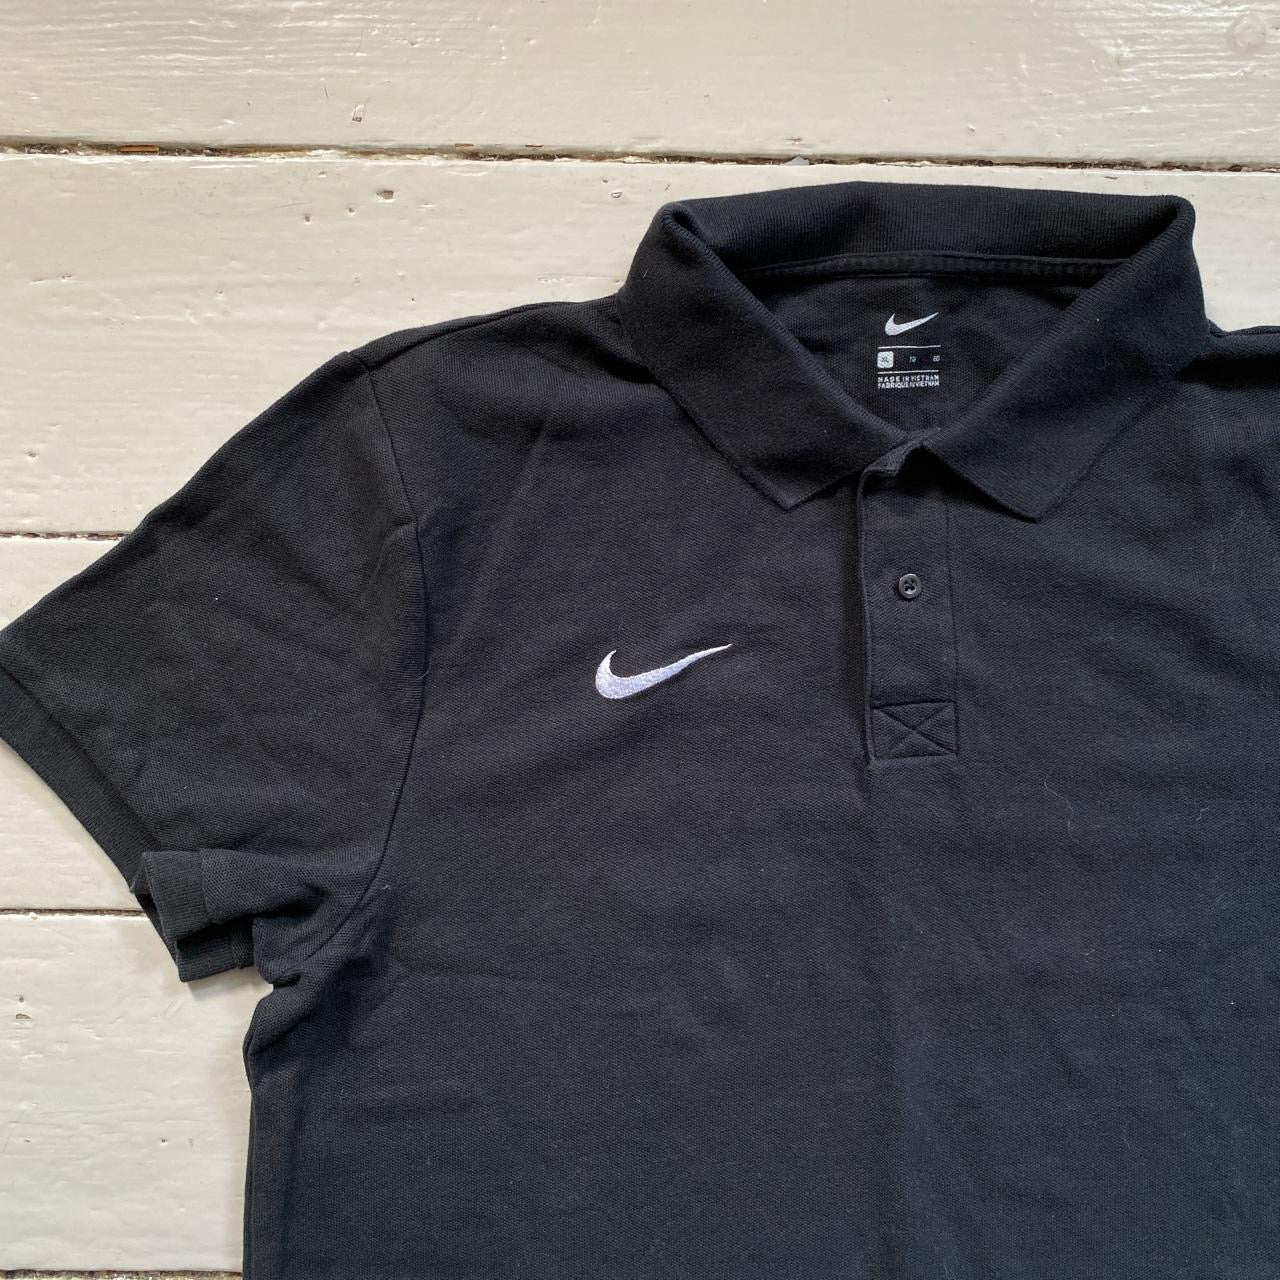 Nike Swoosh Black Polo Shirt (XL)